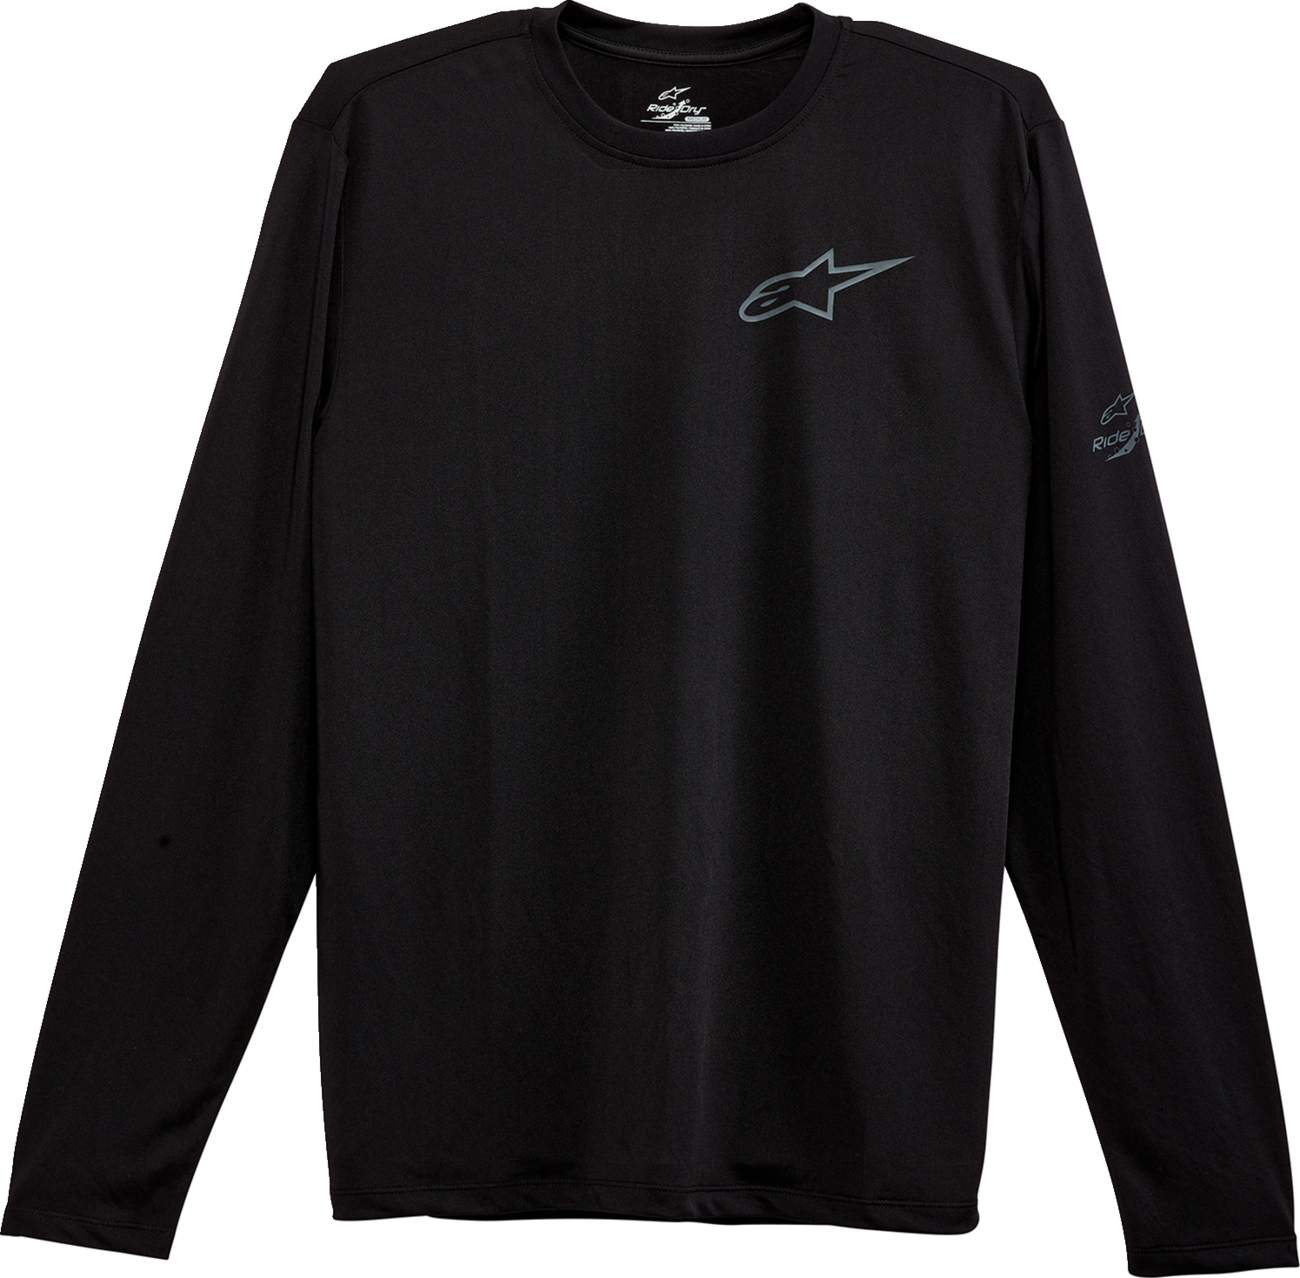 ALPINESTARS Pursue Performance Long-Sleeve T-Shirt - Black - Medium 1232-71000-10-M